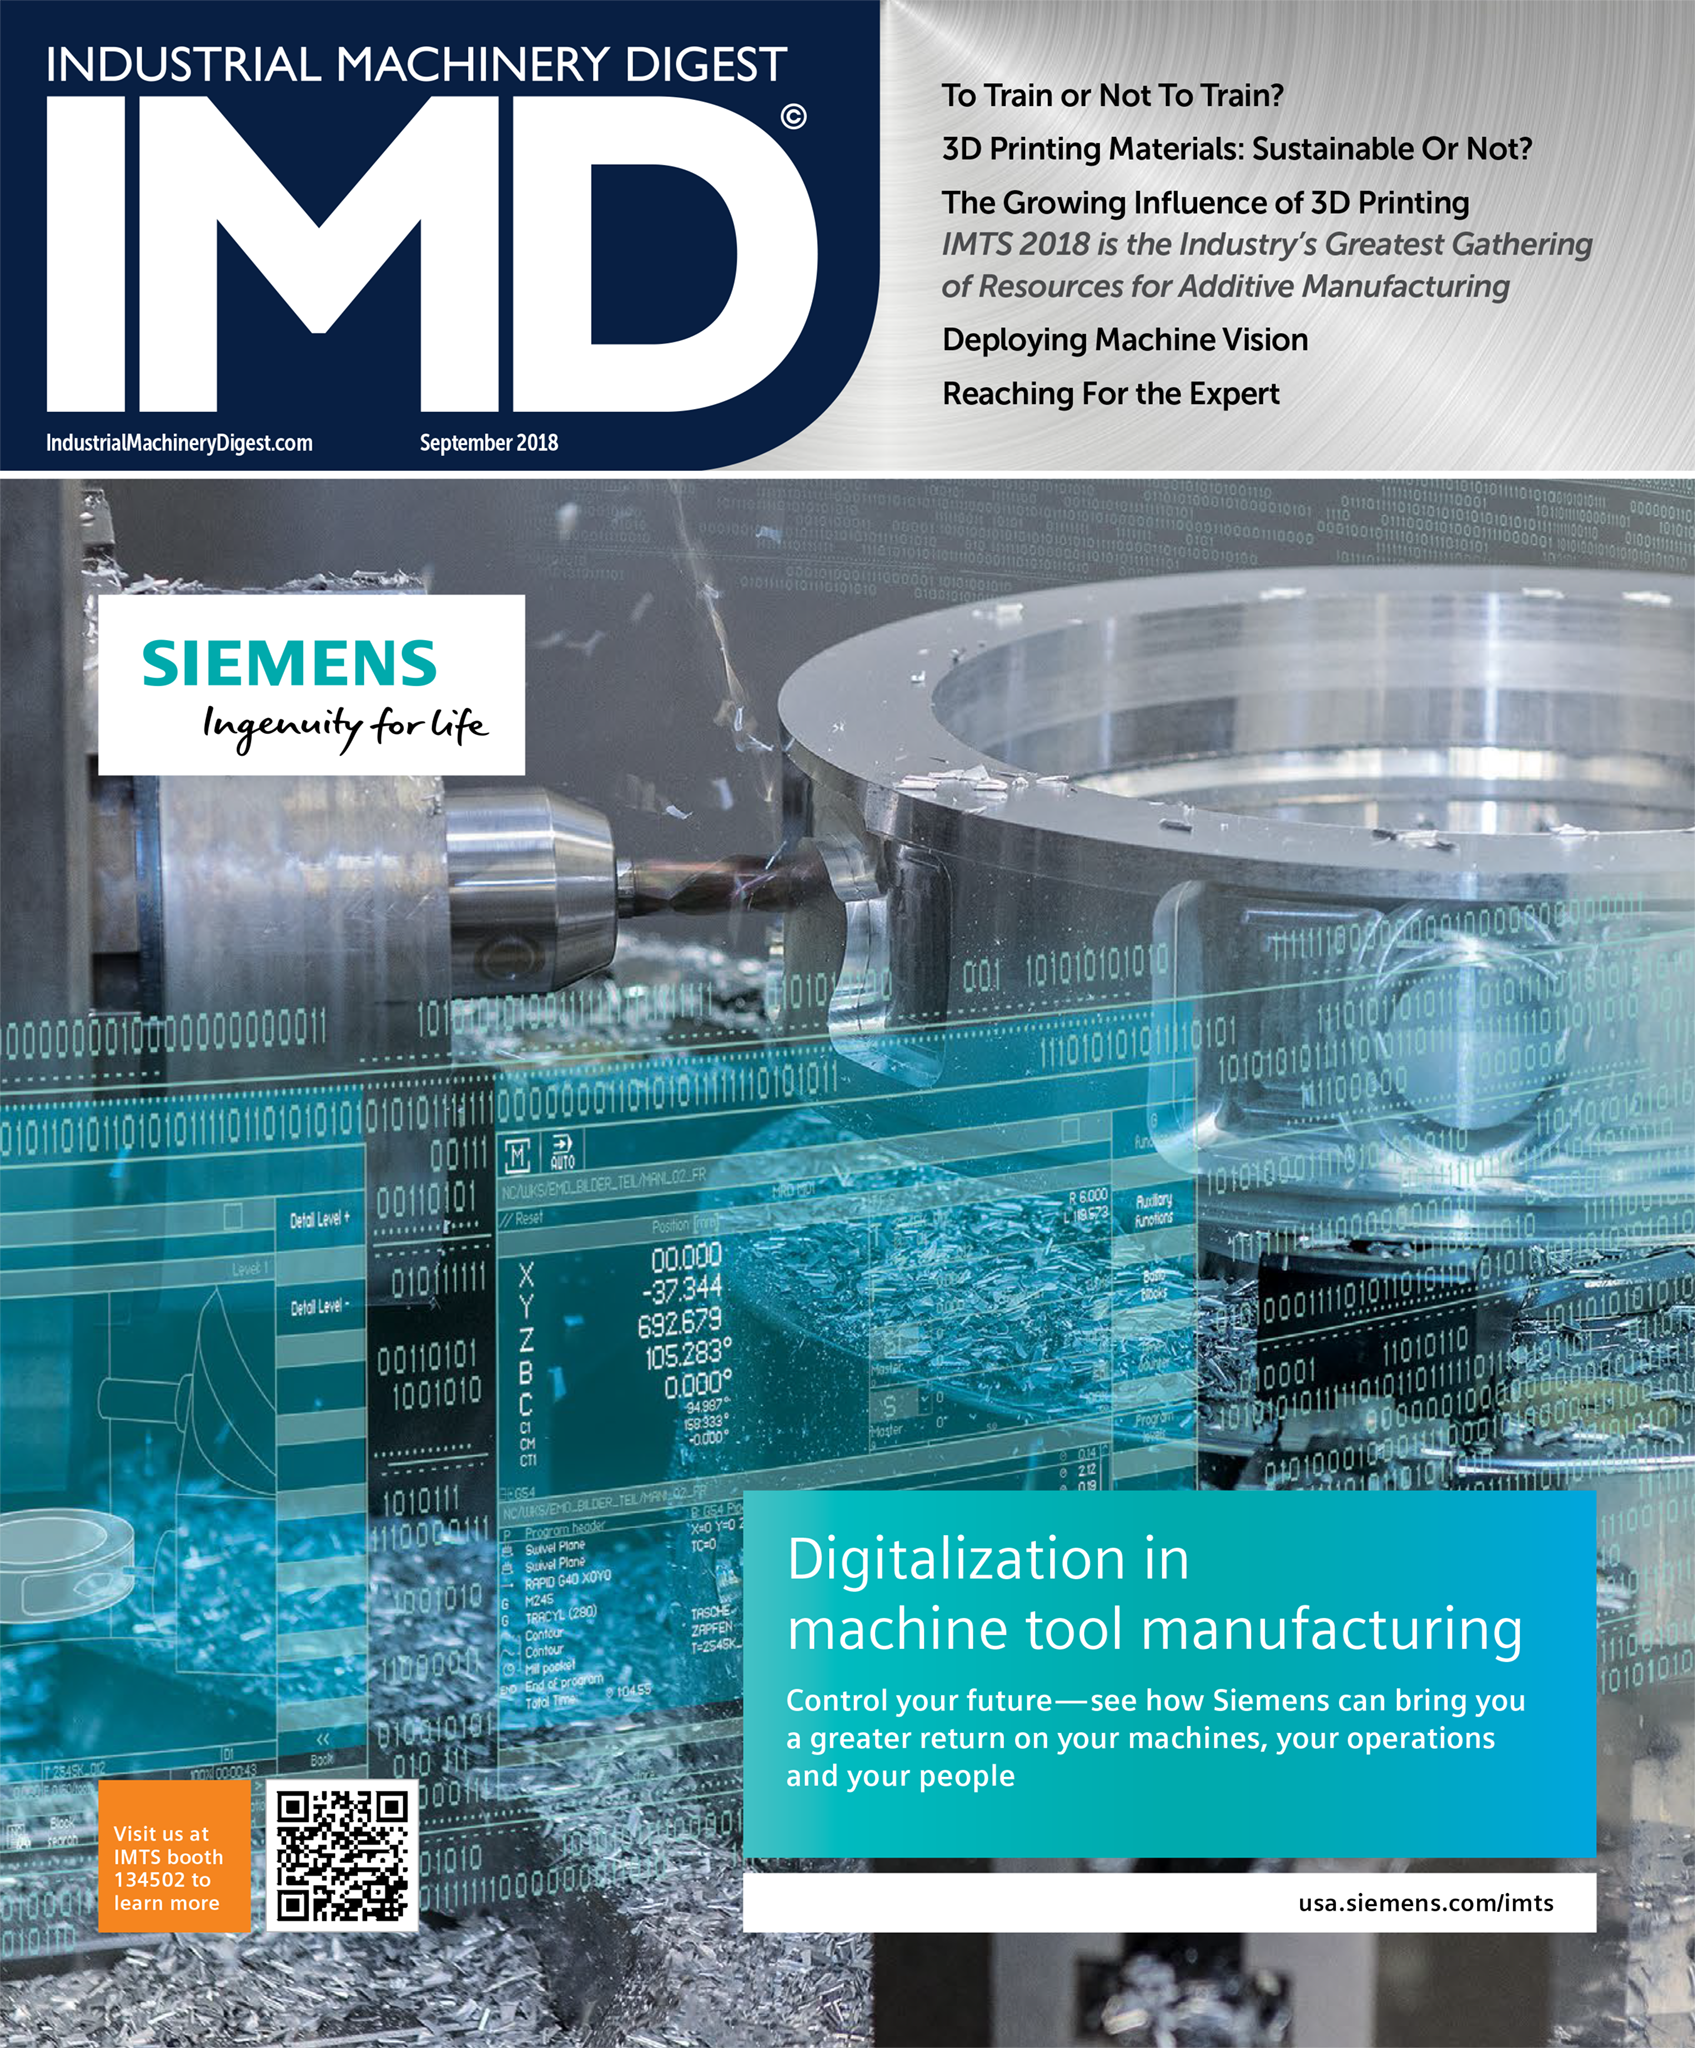 Industrial Machinery Digest, IMD, September, 2018, IMTS, Siemens